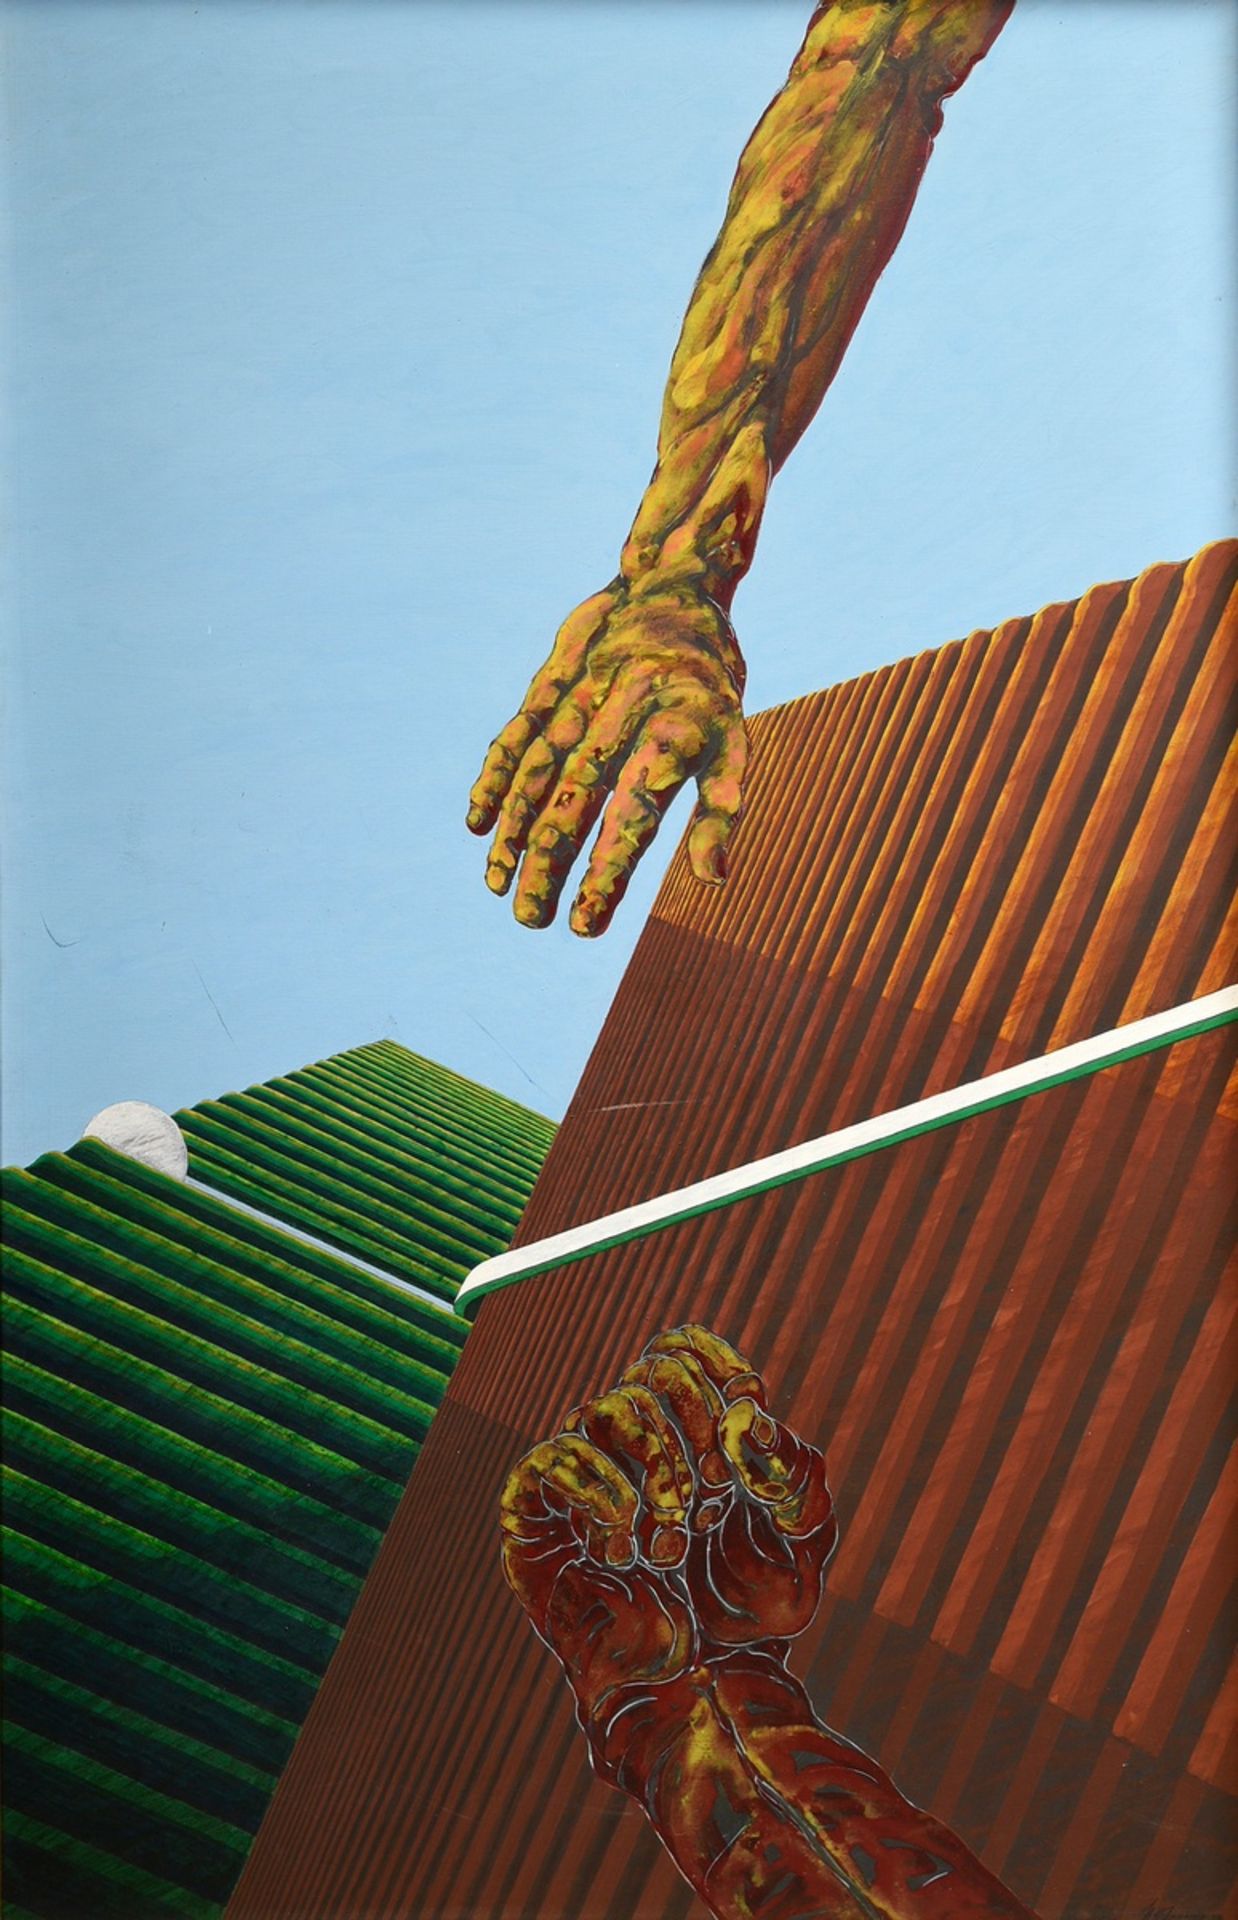 Hoflehner, Rudolf (1916-1995) "Landscape with open hand and fist" 1978, acrylic/pastel chalk/canvas